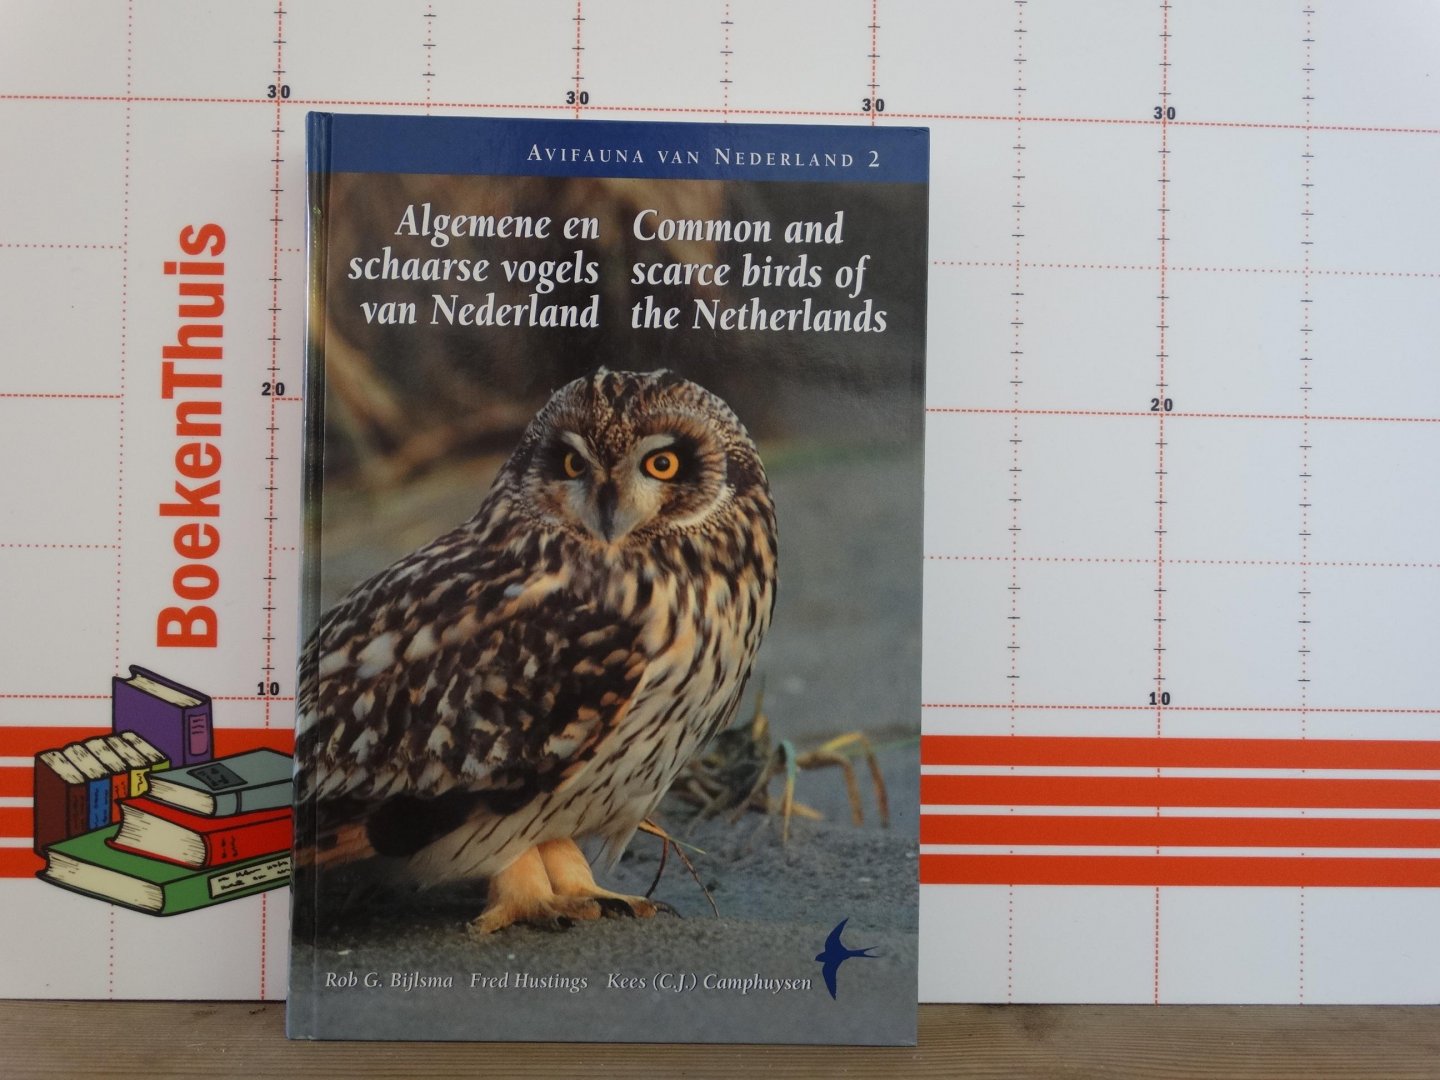 Bijlsma, Rob G. - Hustings, Fred - Camphuysen, Kees (C.J.) - Avifauna van Nederland - 2 - algemene en schaarse vogels van Nederland / common and scarce birds of the Netherlands